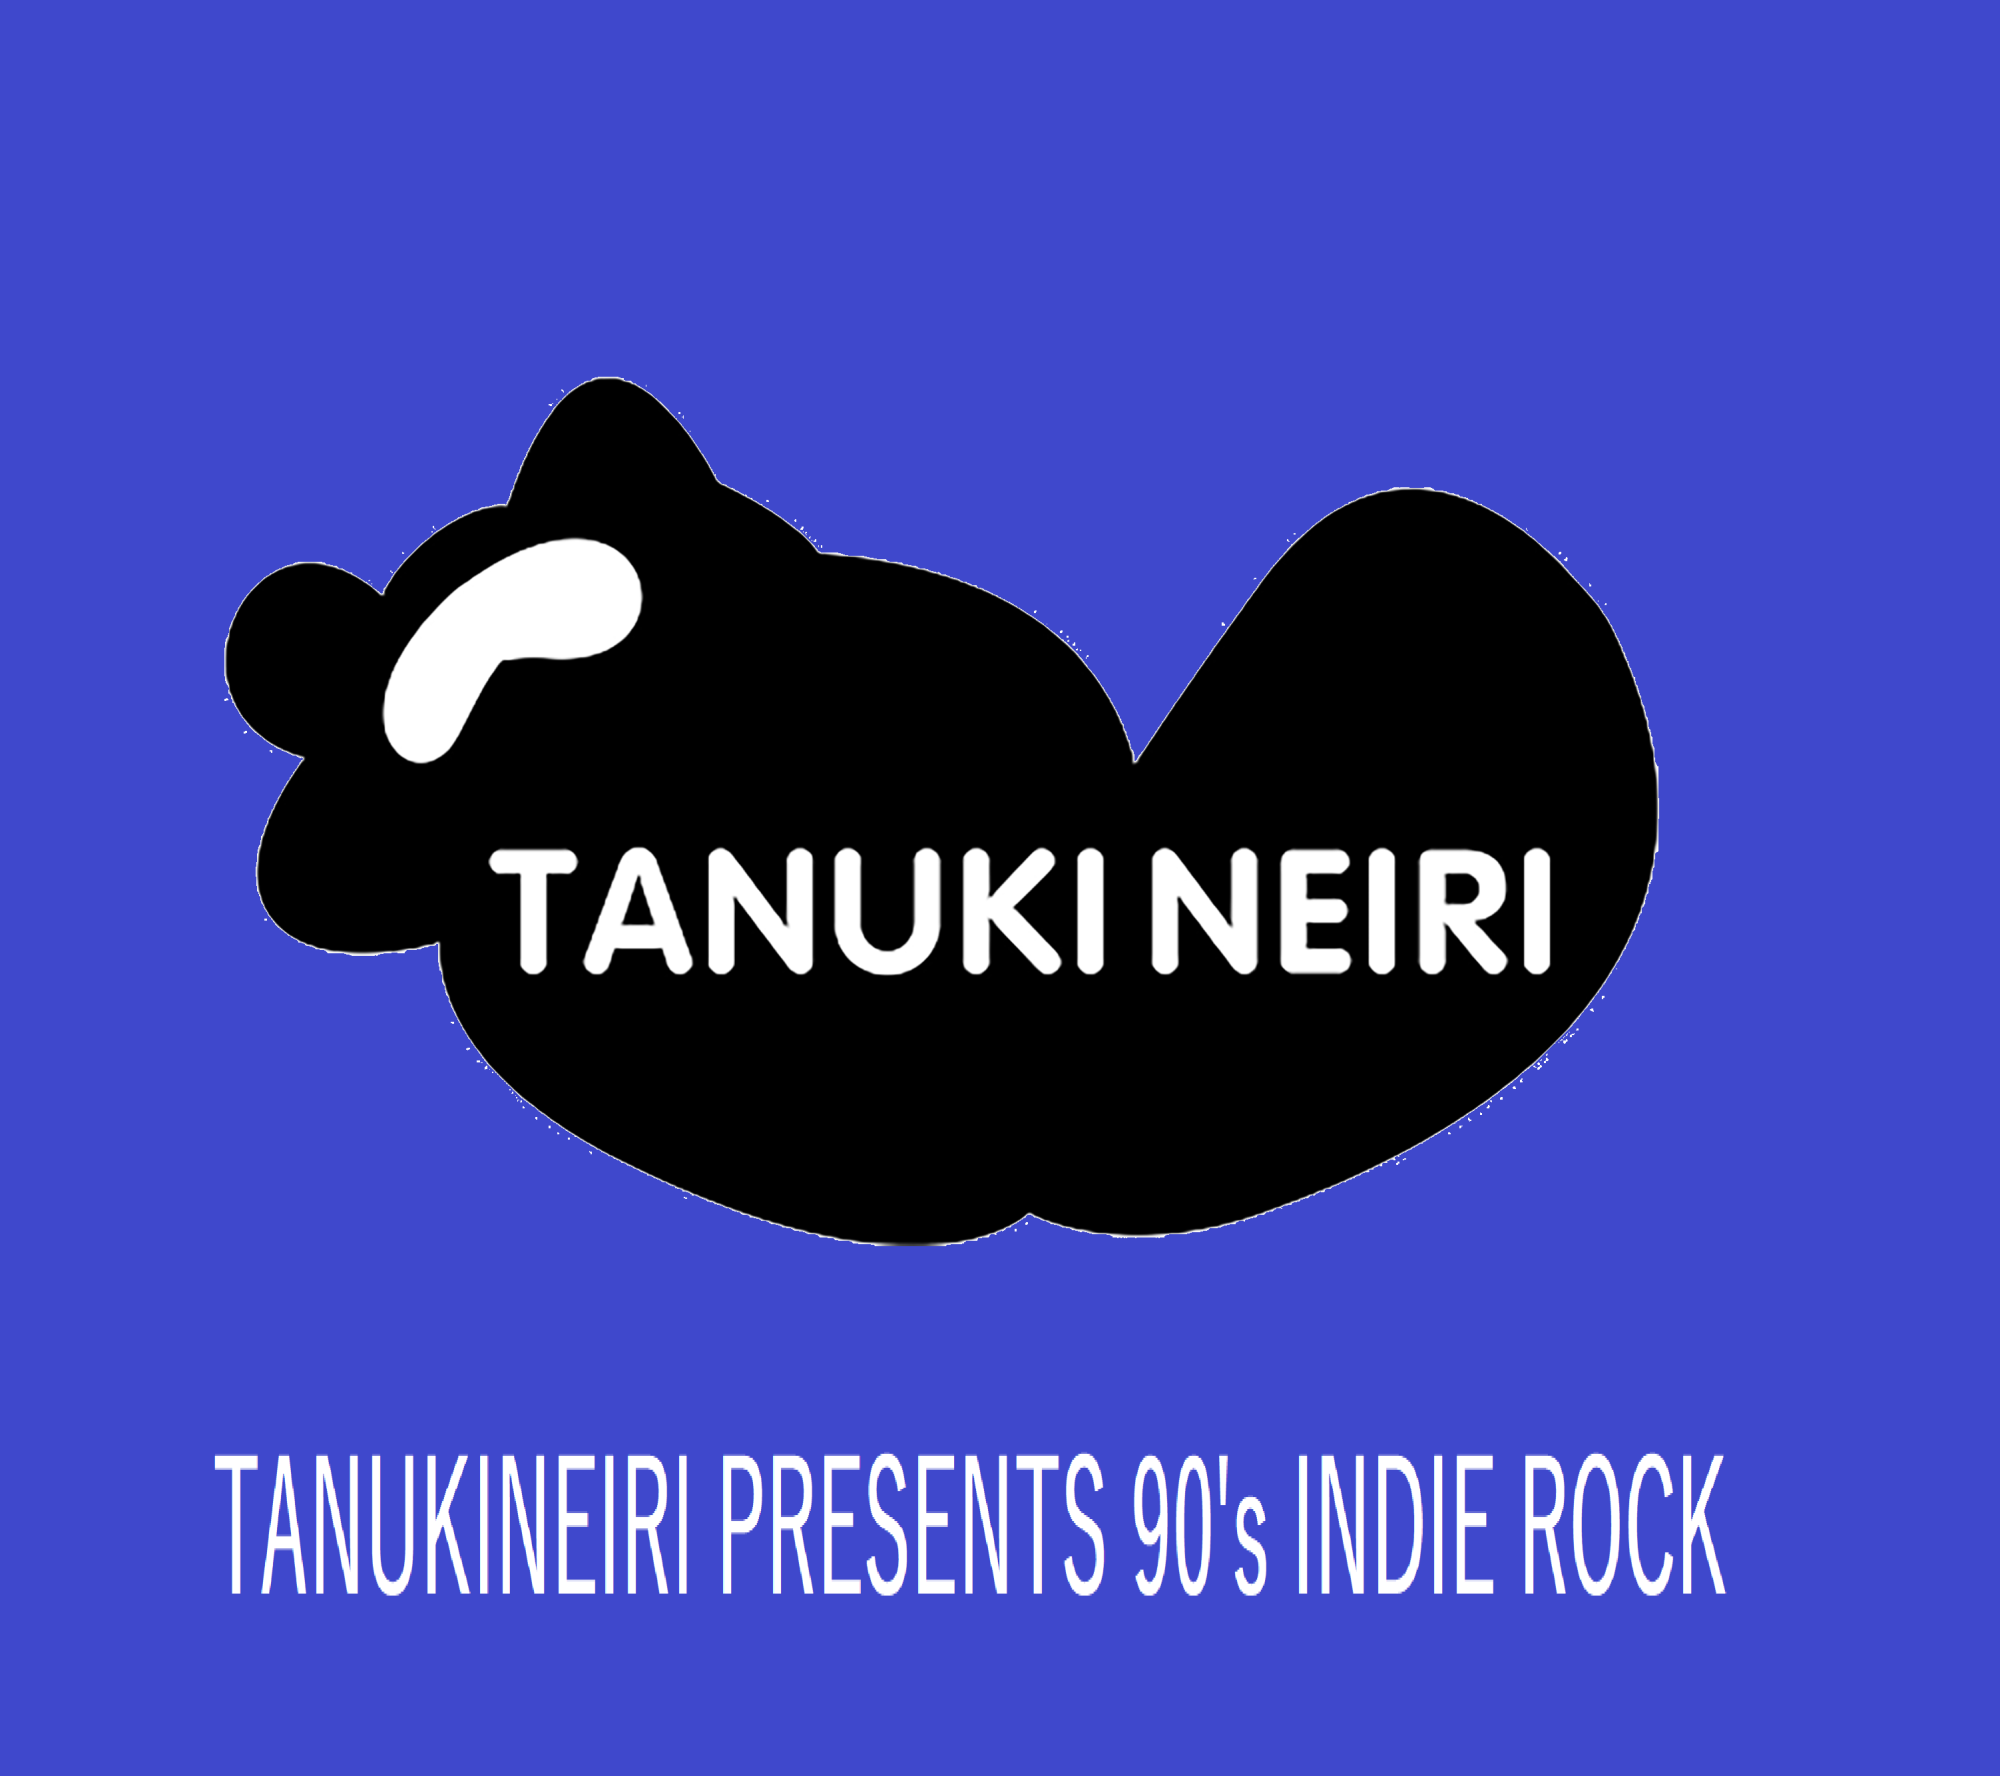 TANUKINEIRI 90'S INDIE ROCK 100